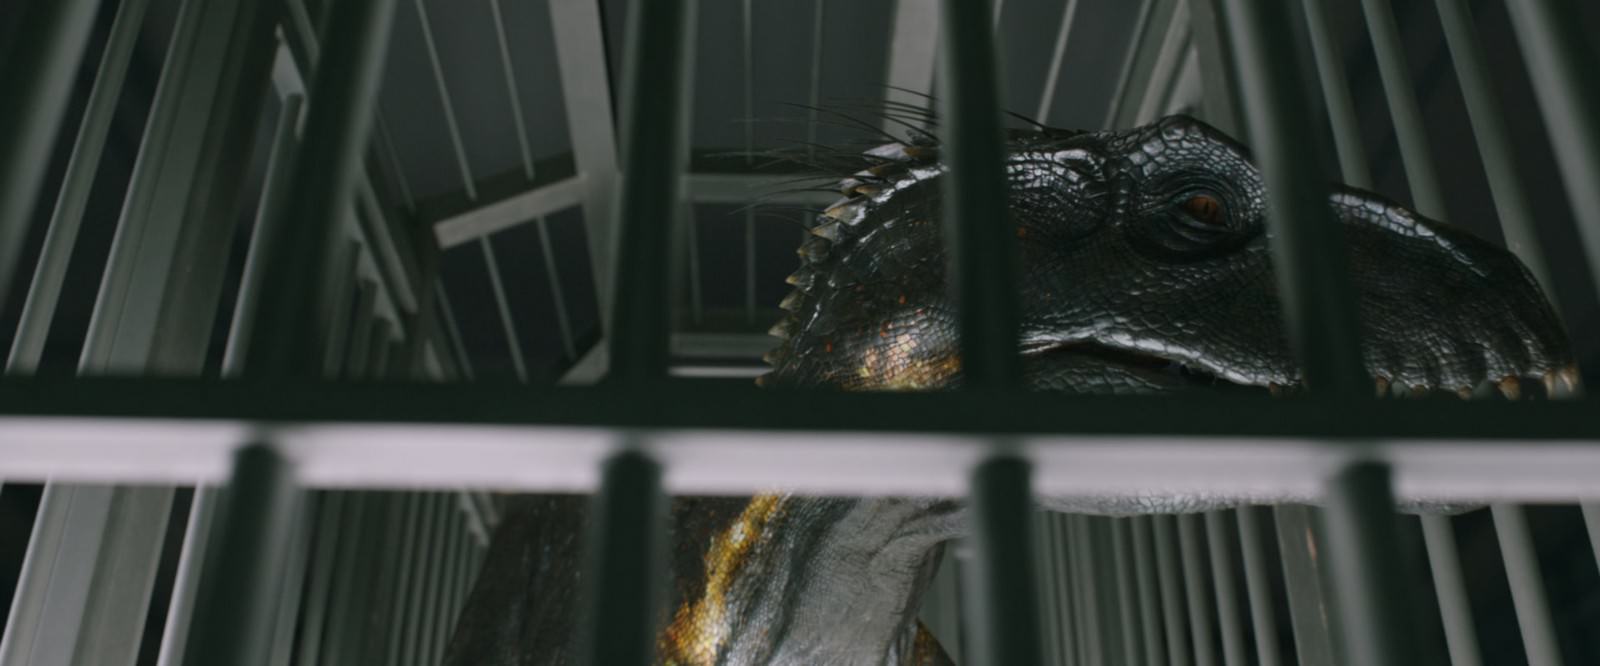 Movie, Jurassic World: Fallen Kingdom(美國) / 侏羅紀世界：殞落國度(台) / 侏罗纪世界2(中) / 侏羅紀世界：迷失國度(港), 電影劇照